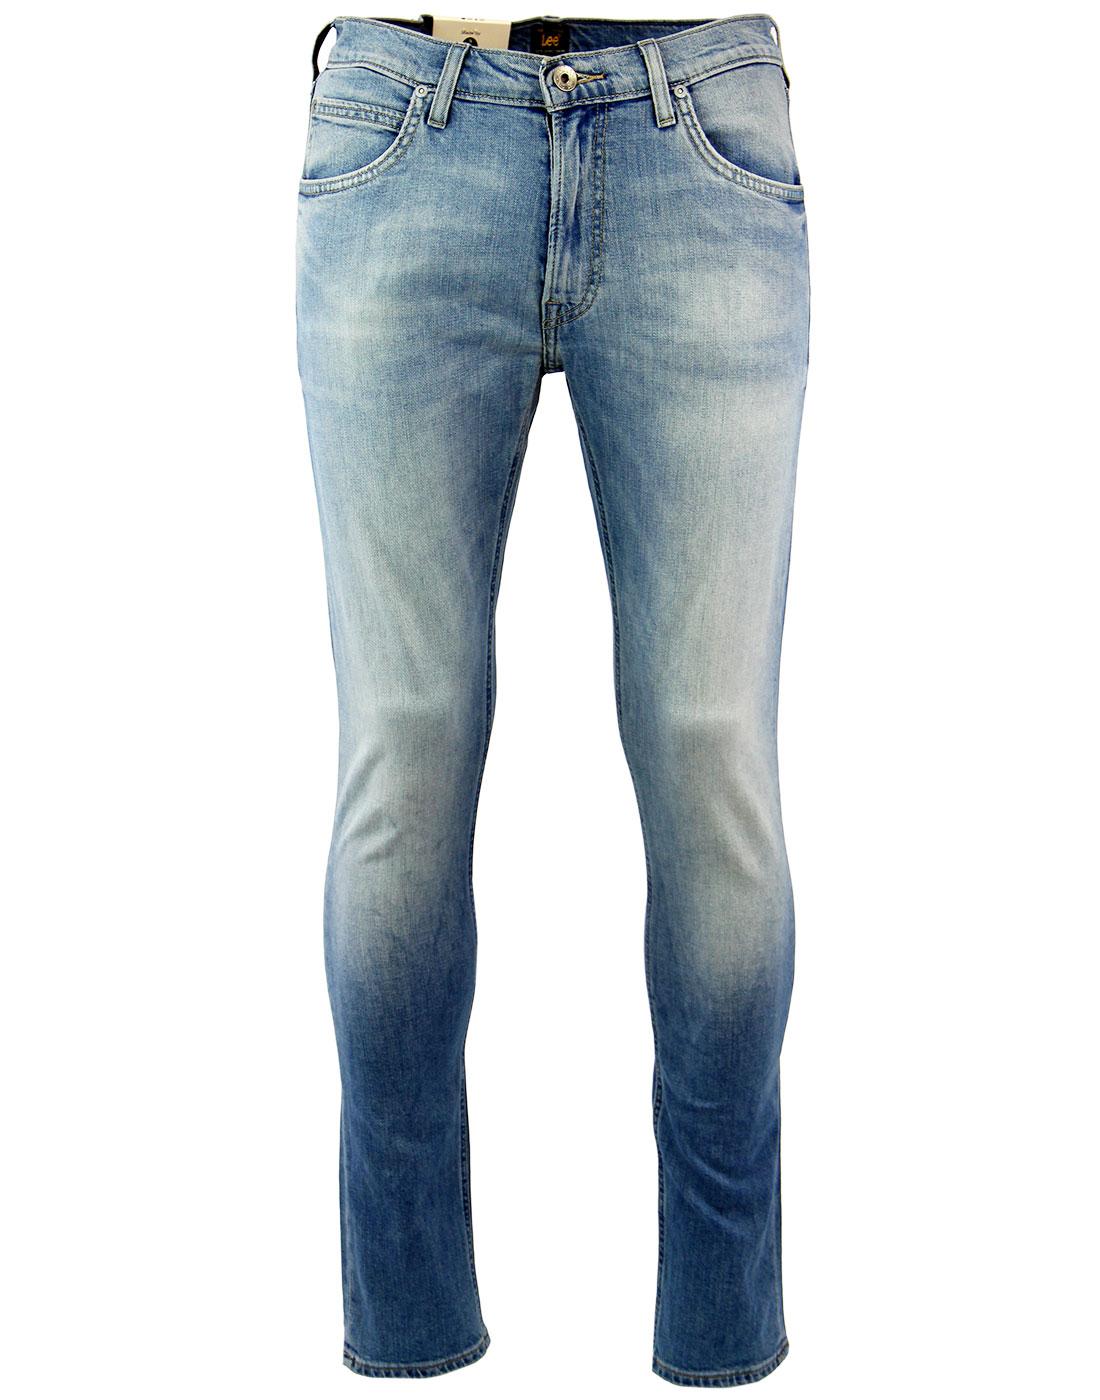 Luke LEE Slim Tapered Retro Beach Blue Denim Jeans